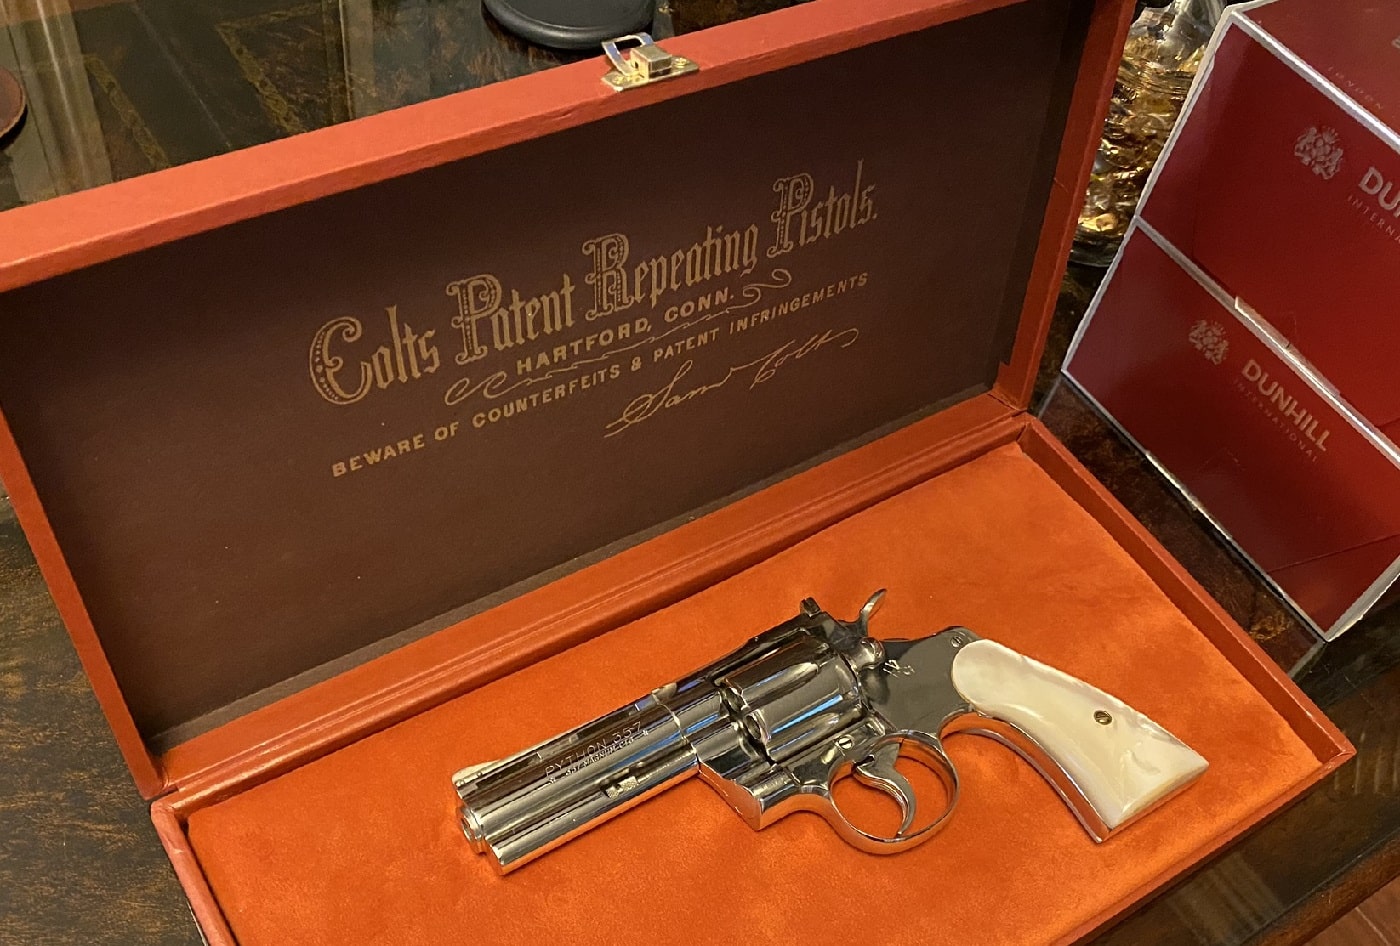 1962 Colt Python .357 Magnum in a display case